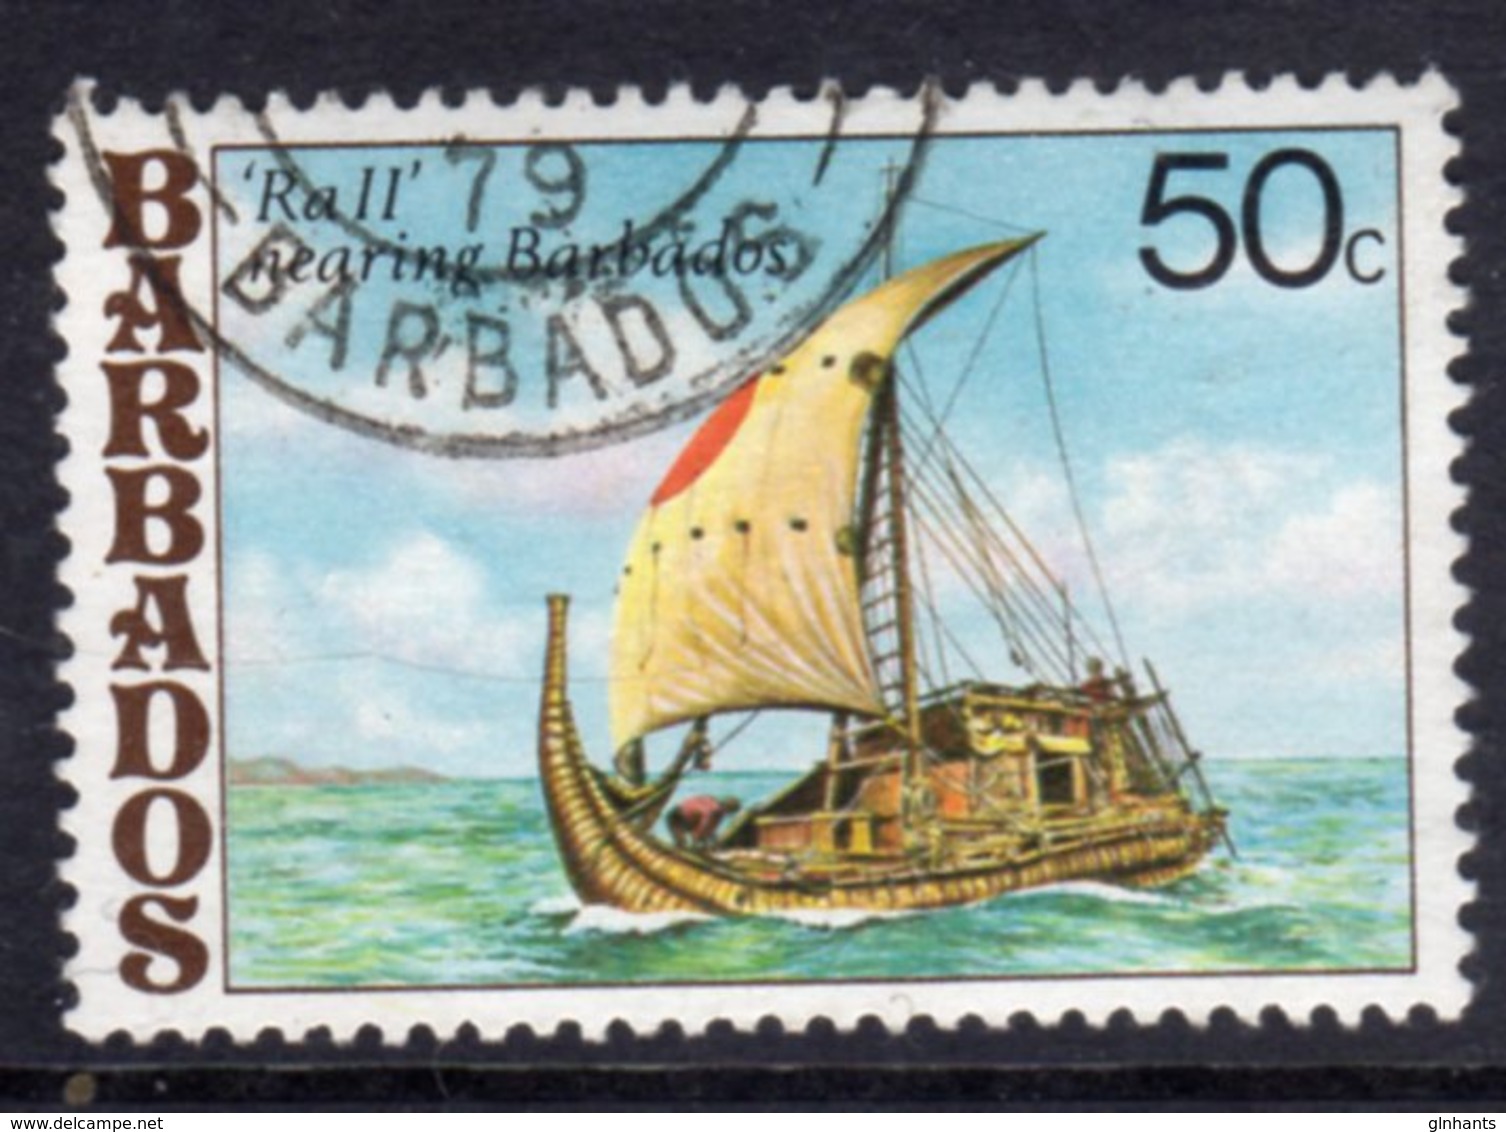 BARBADOS - 1979 50c SAILING SHIP STAMP FINE USED SG 615 - Barbados (1966-...)